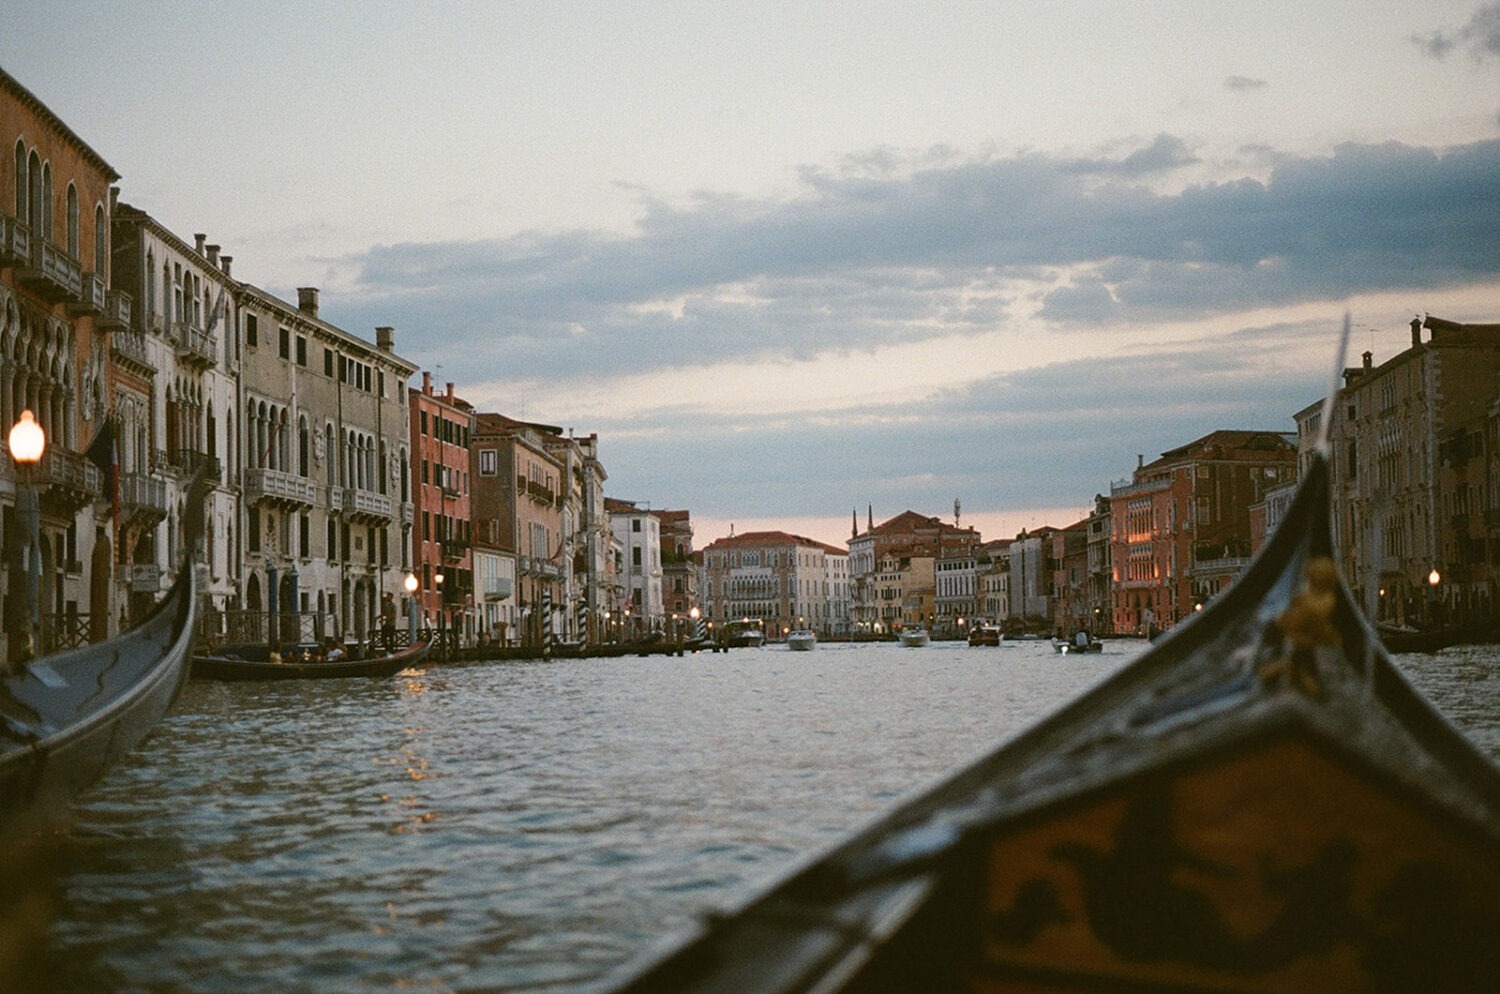 riding boats at Venice Italy sunset